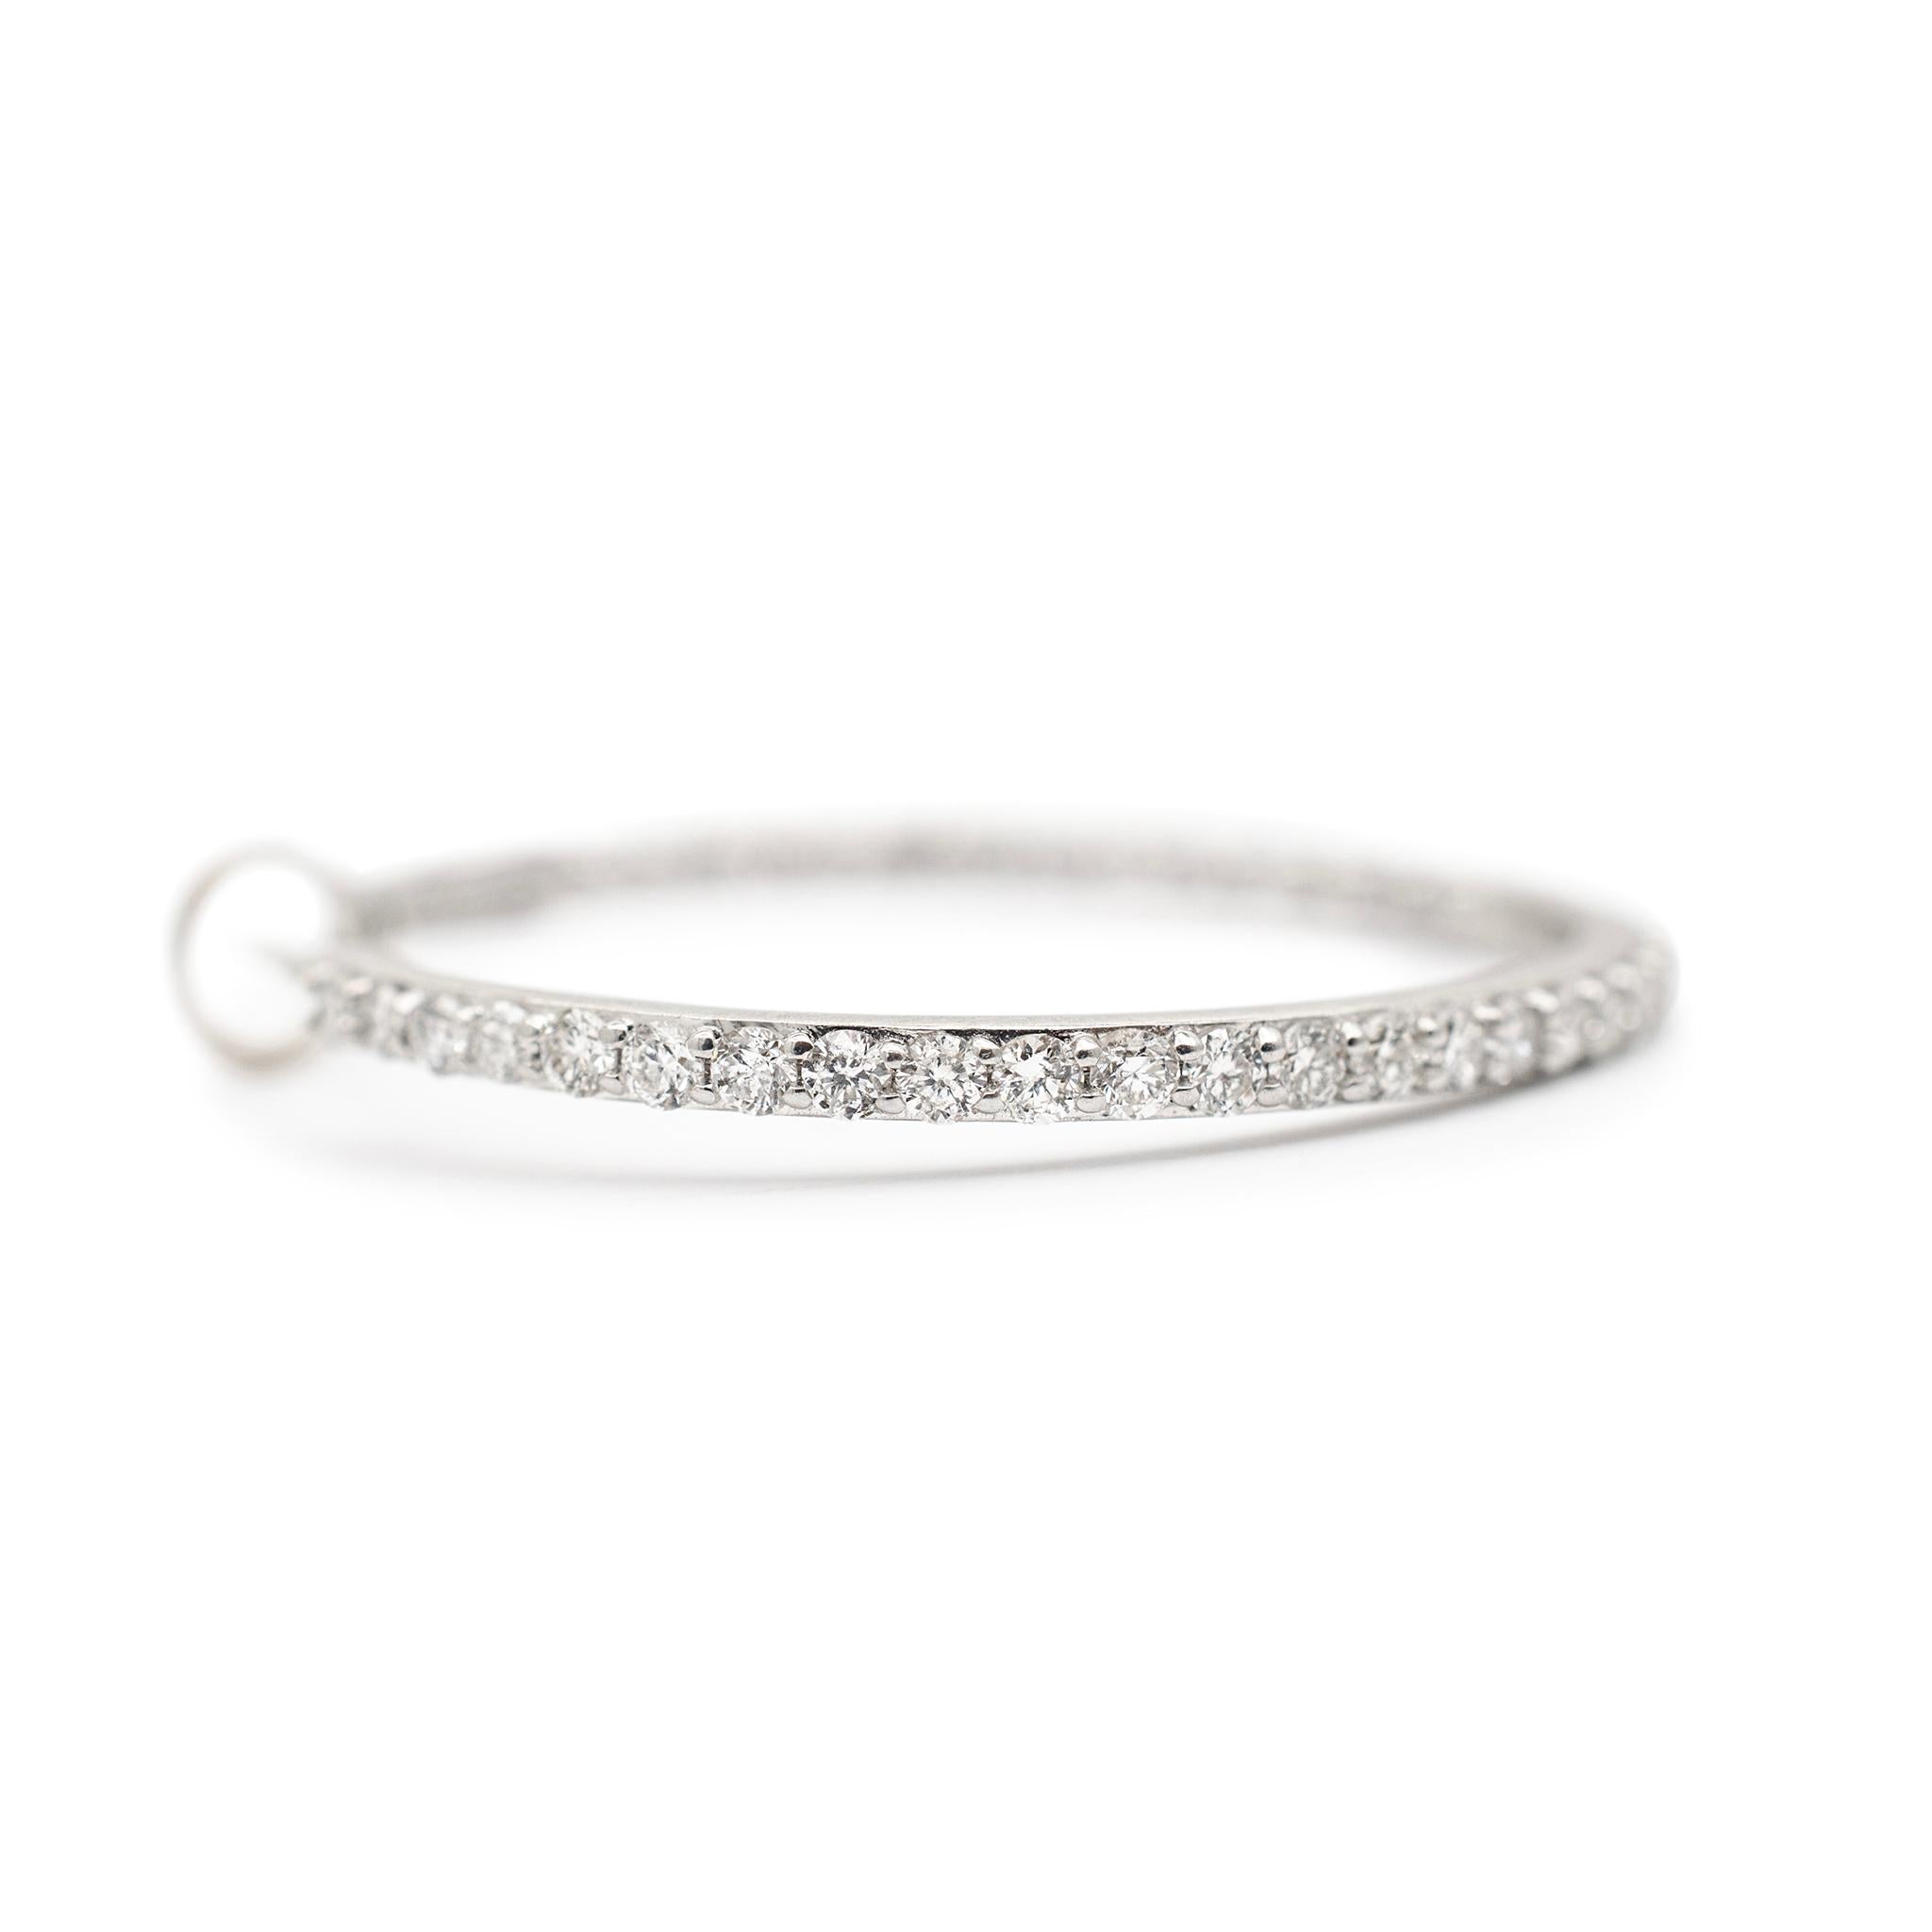  Ladies 14K White Gold 1.75ct Inside Out Diamond Hoops Earrings Pour femmes 